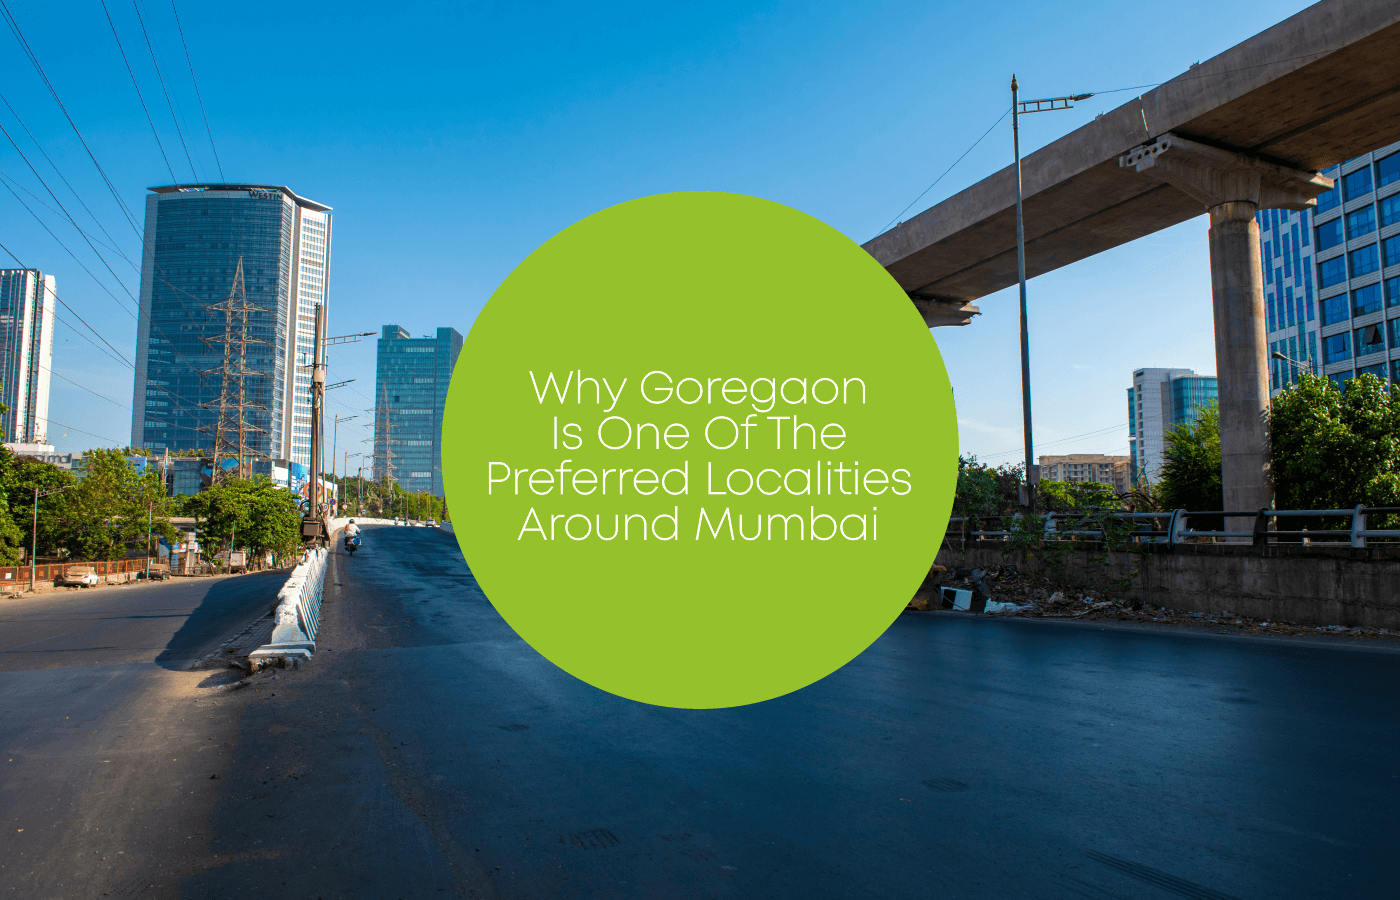 Why Goregaon Is One of the Preferred Localities around Mumbai